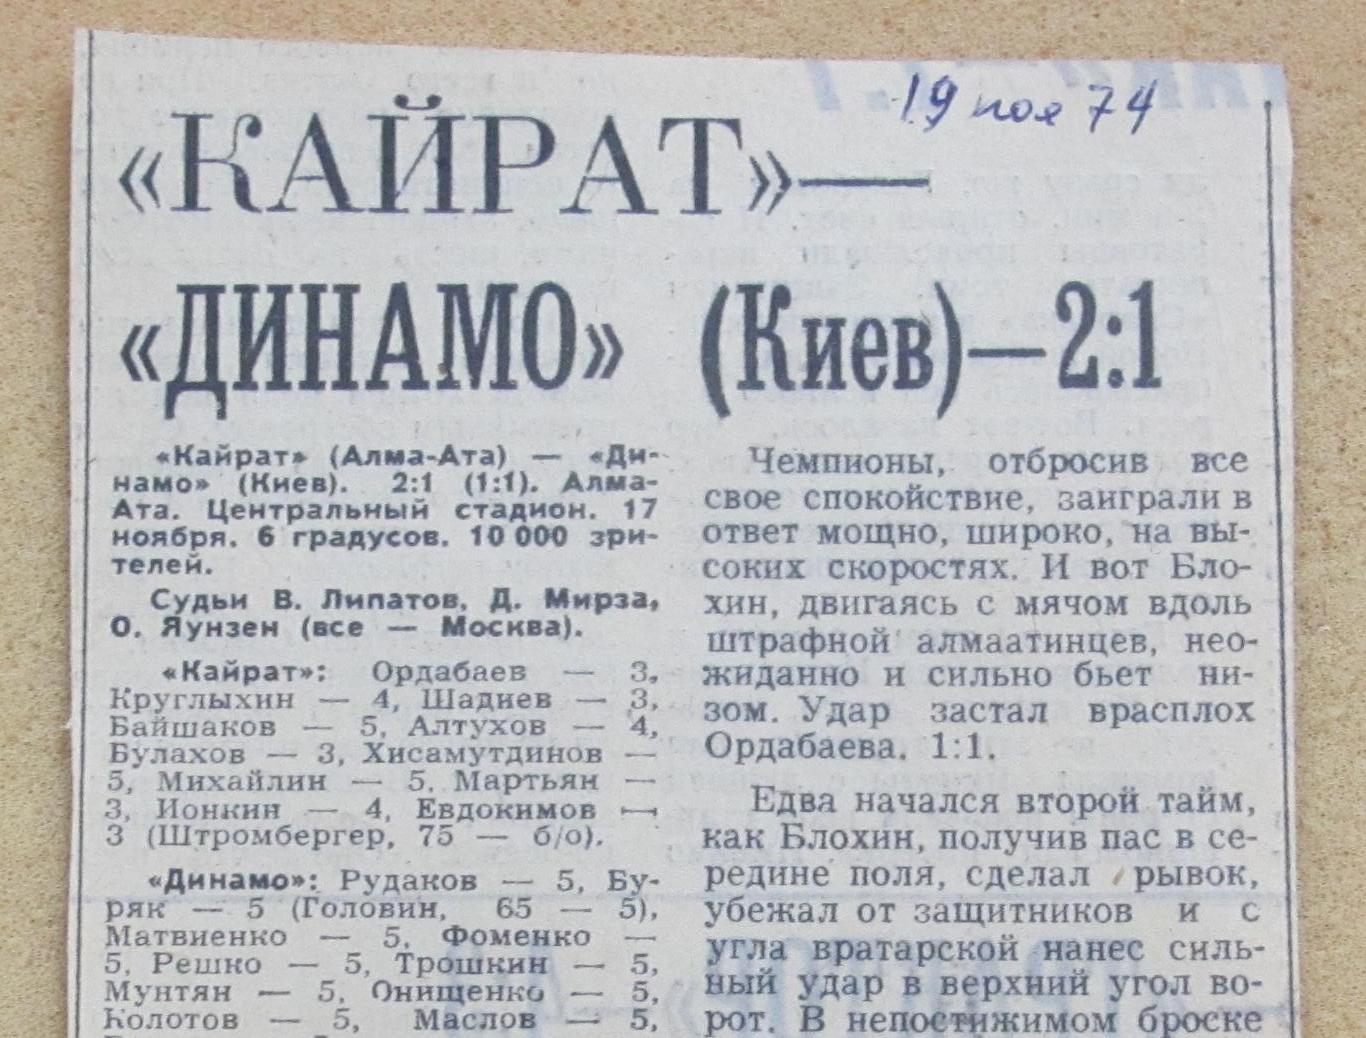 Кайрат Алма-Ата - Динамо Киев 17.11.1974